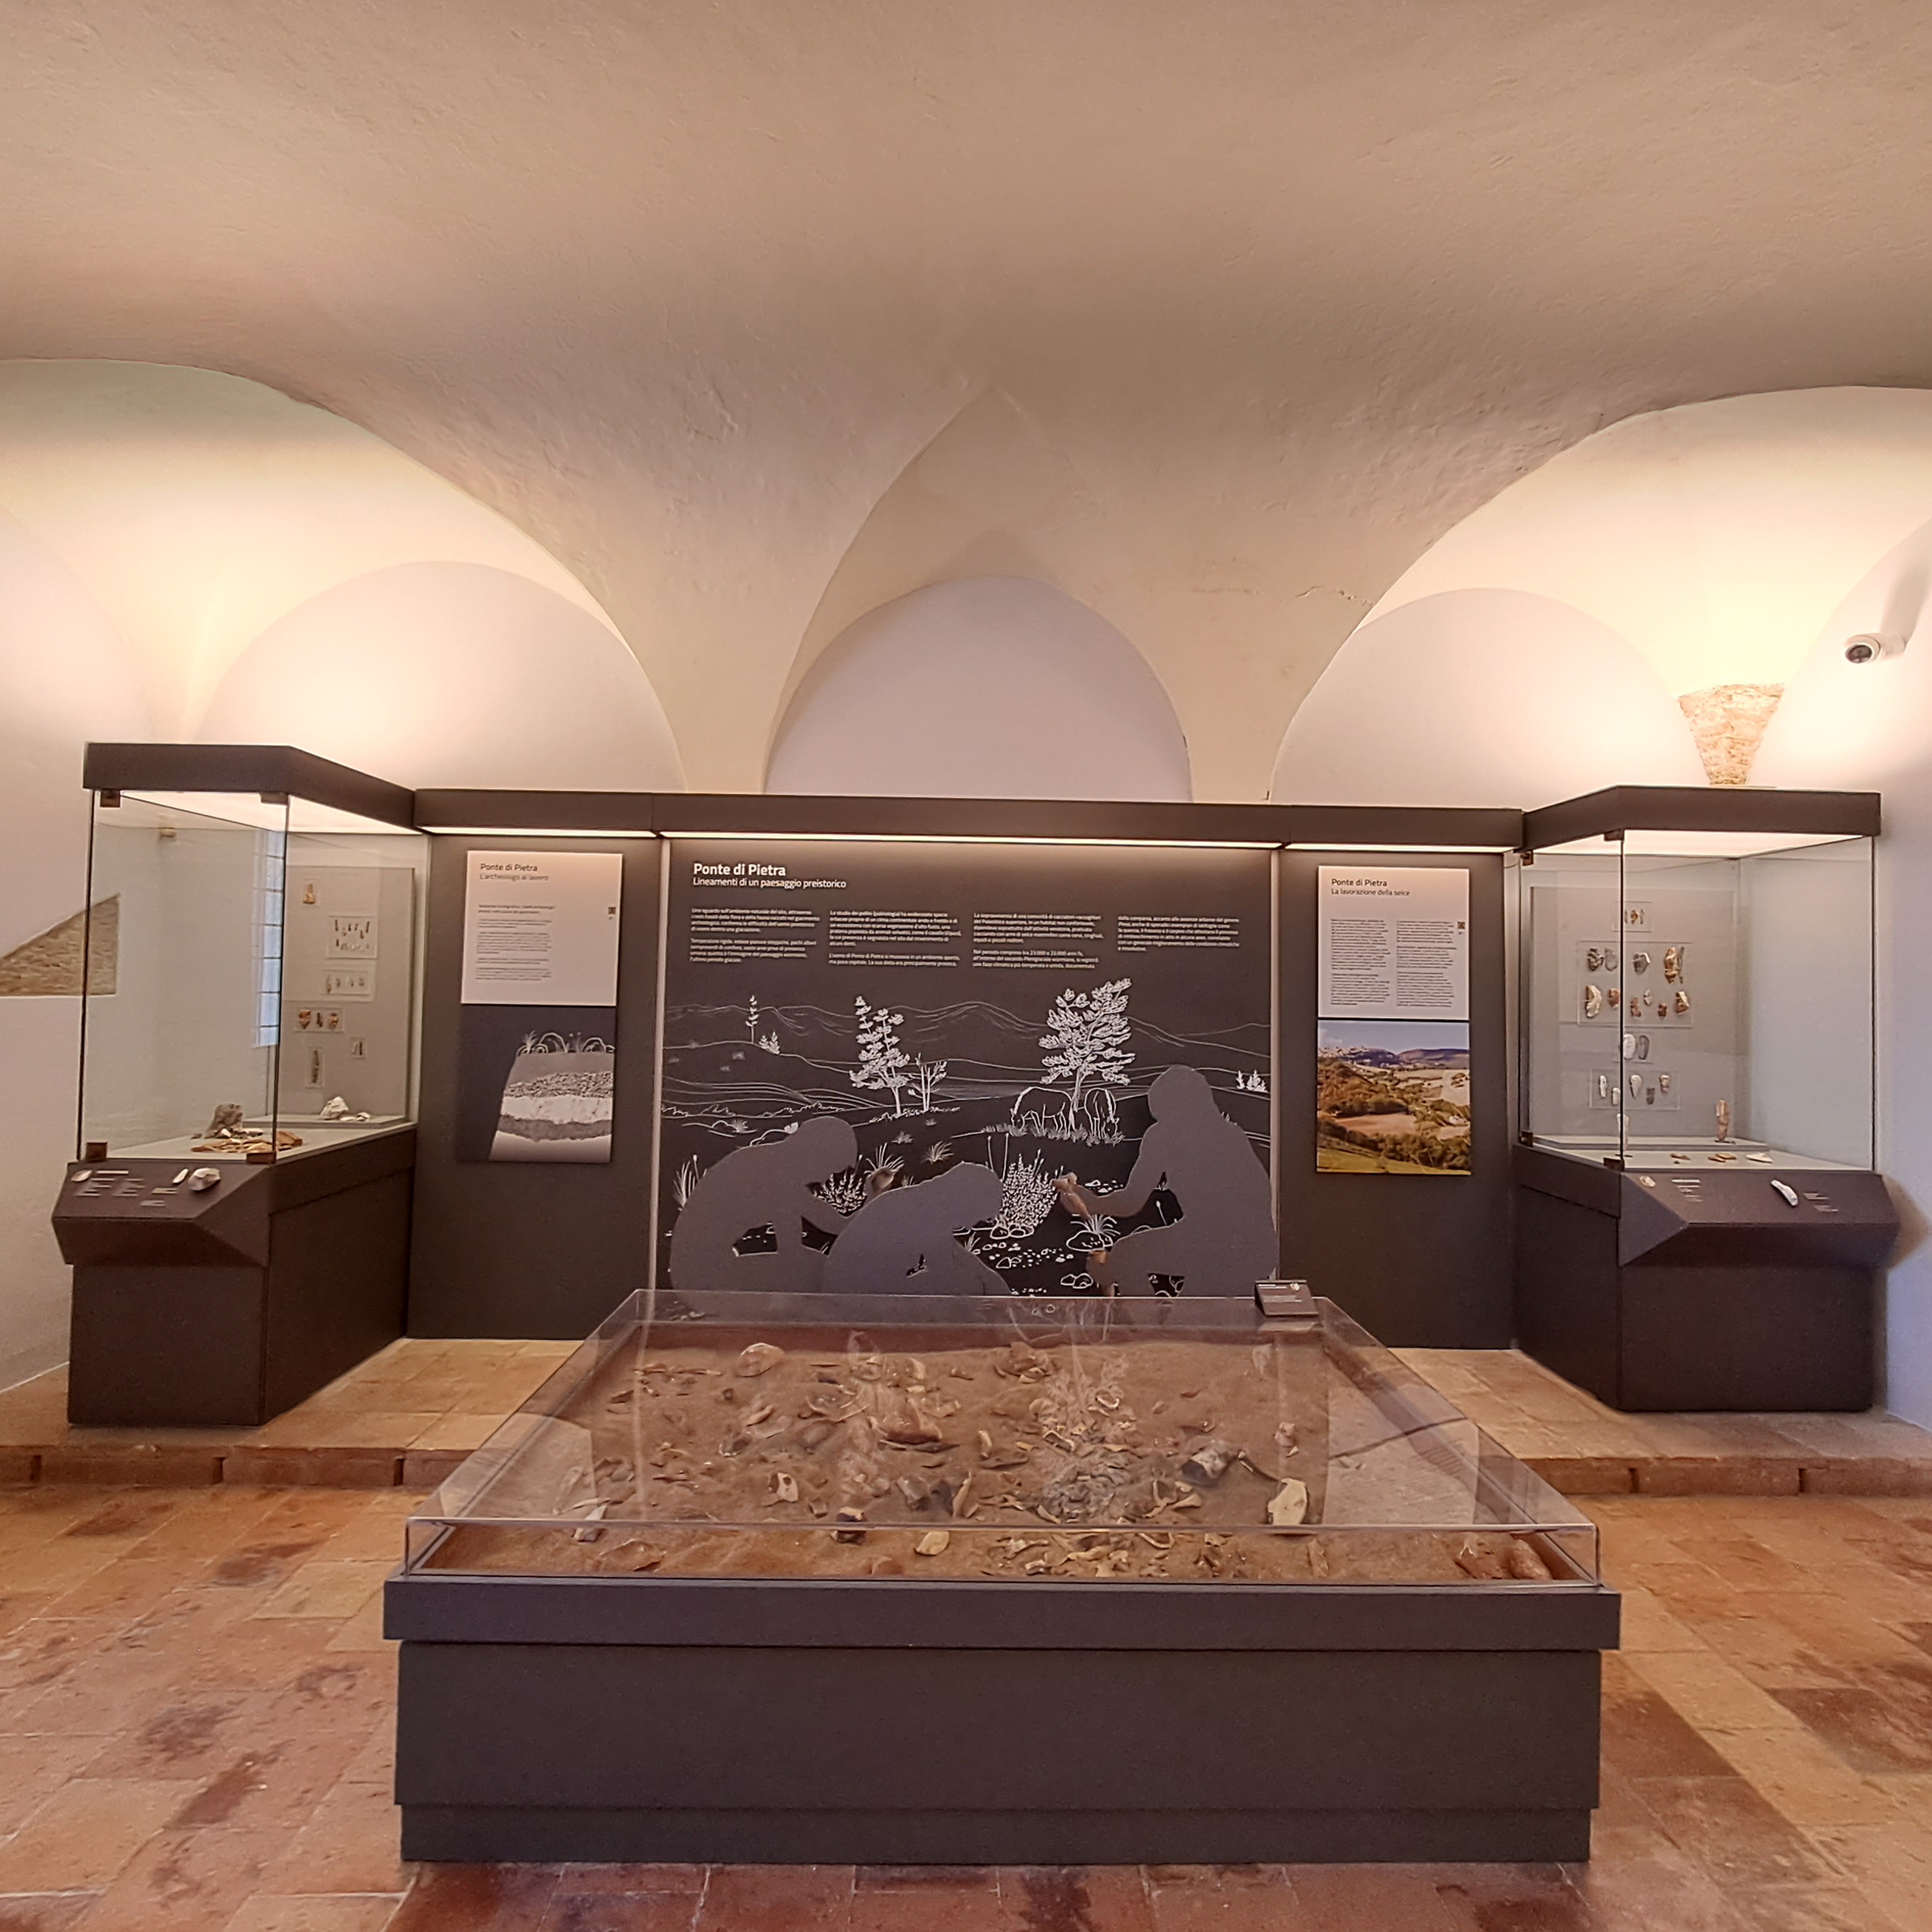 Museo Archeologico Statale di Arcevia